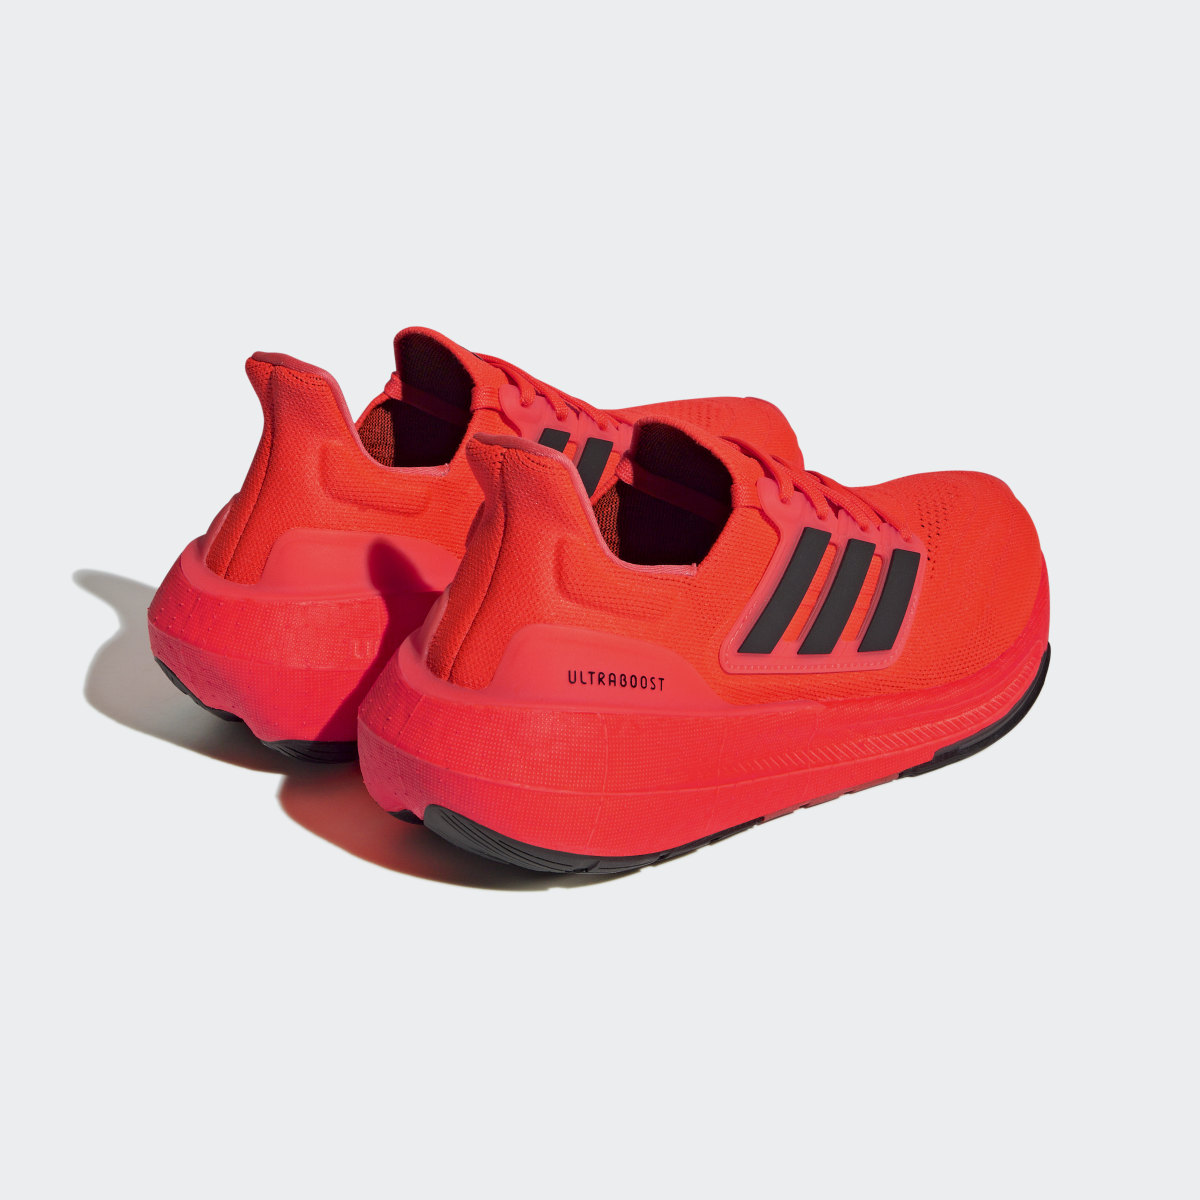 Adidas Ultraboost Light Shoes. 7